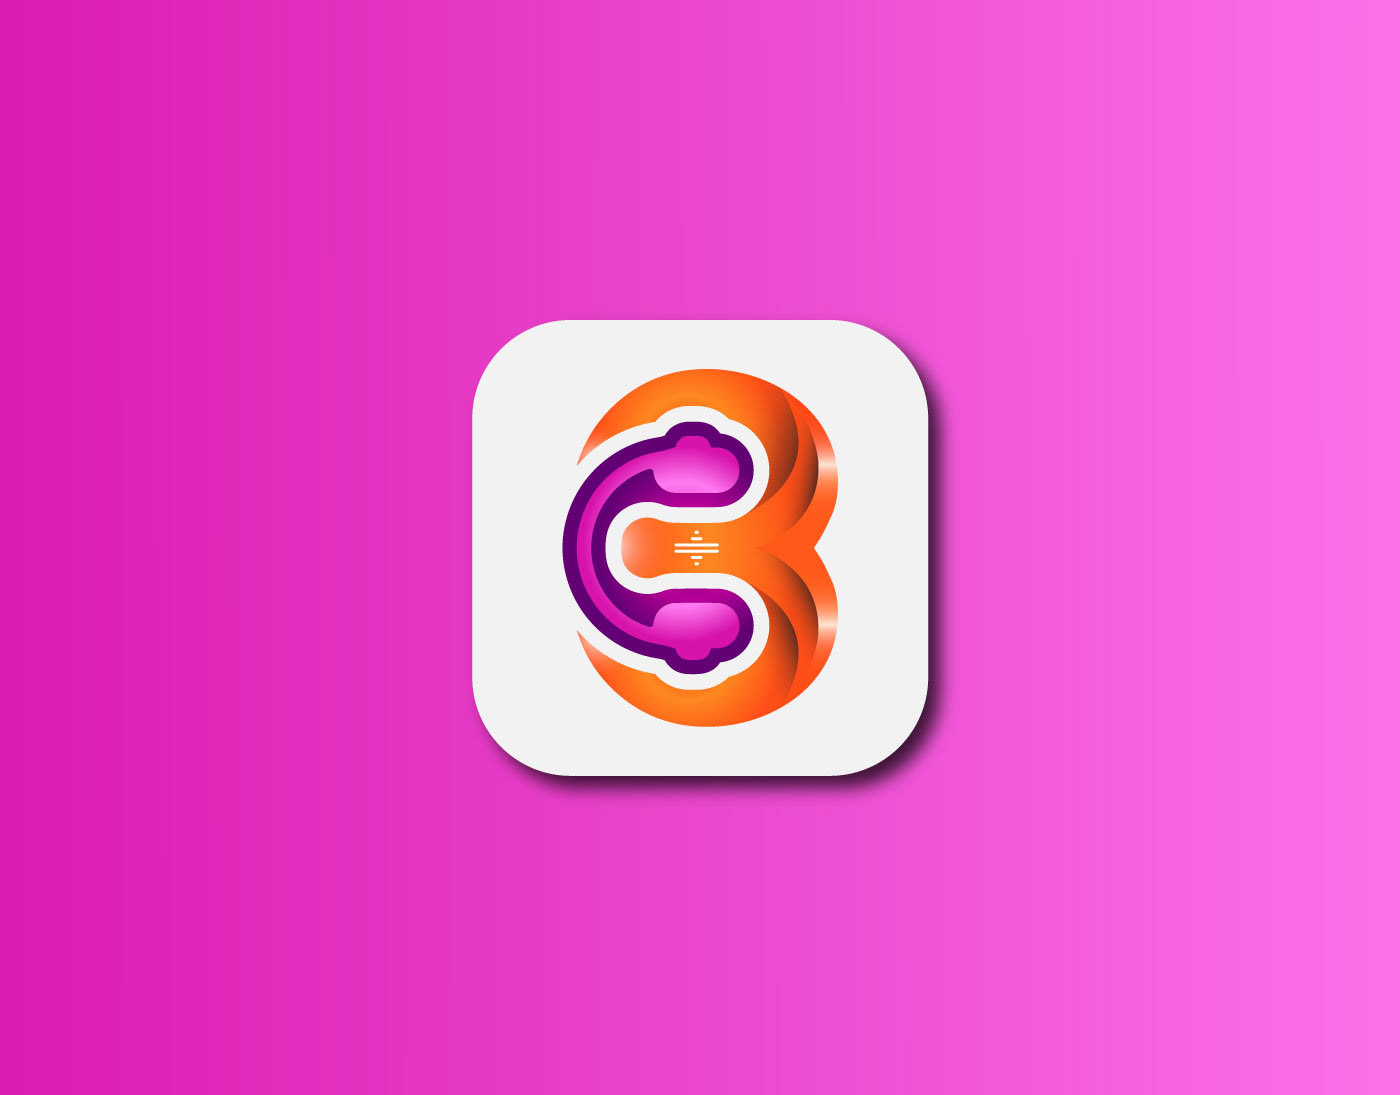 logo Logo Design brand identity Logotype logofolio musiclogo beatmusic beats djlogo letter b beat music logo